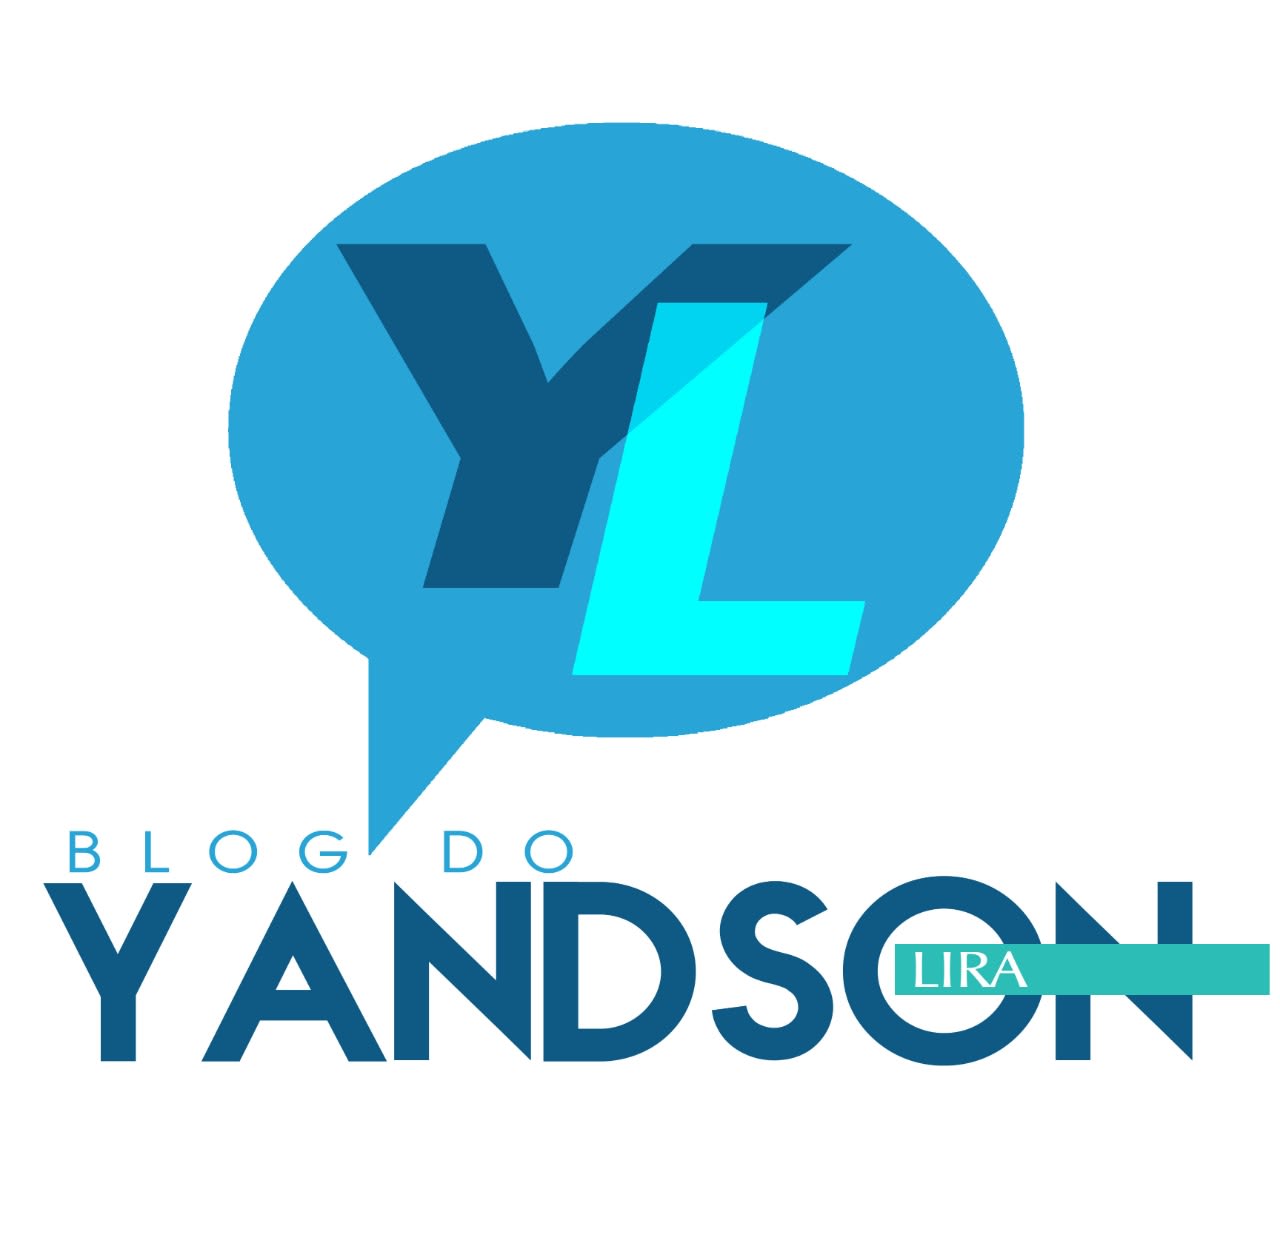 Blog Yandson Lira